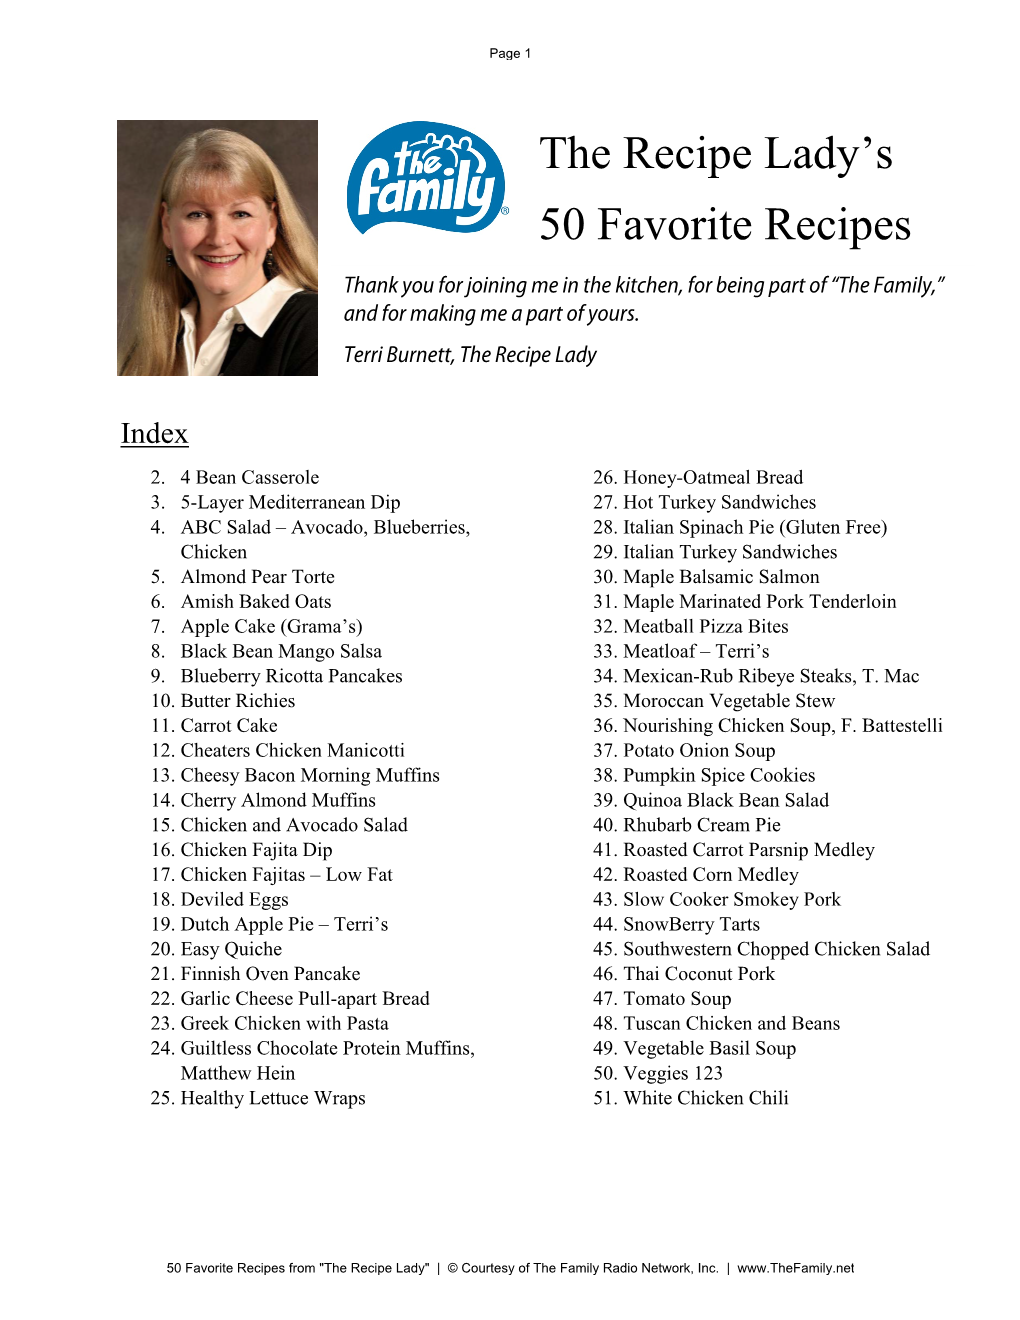 The Recipe Lady's 50 Favorite Recipes